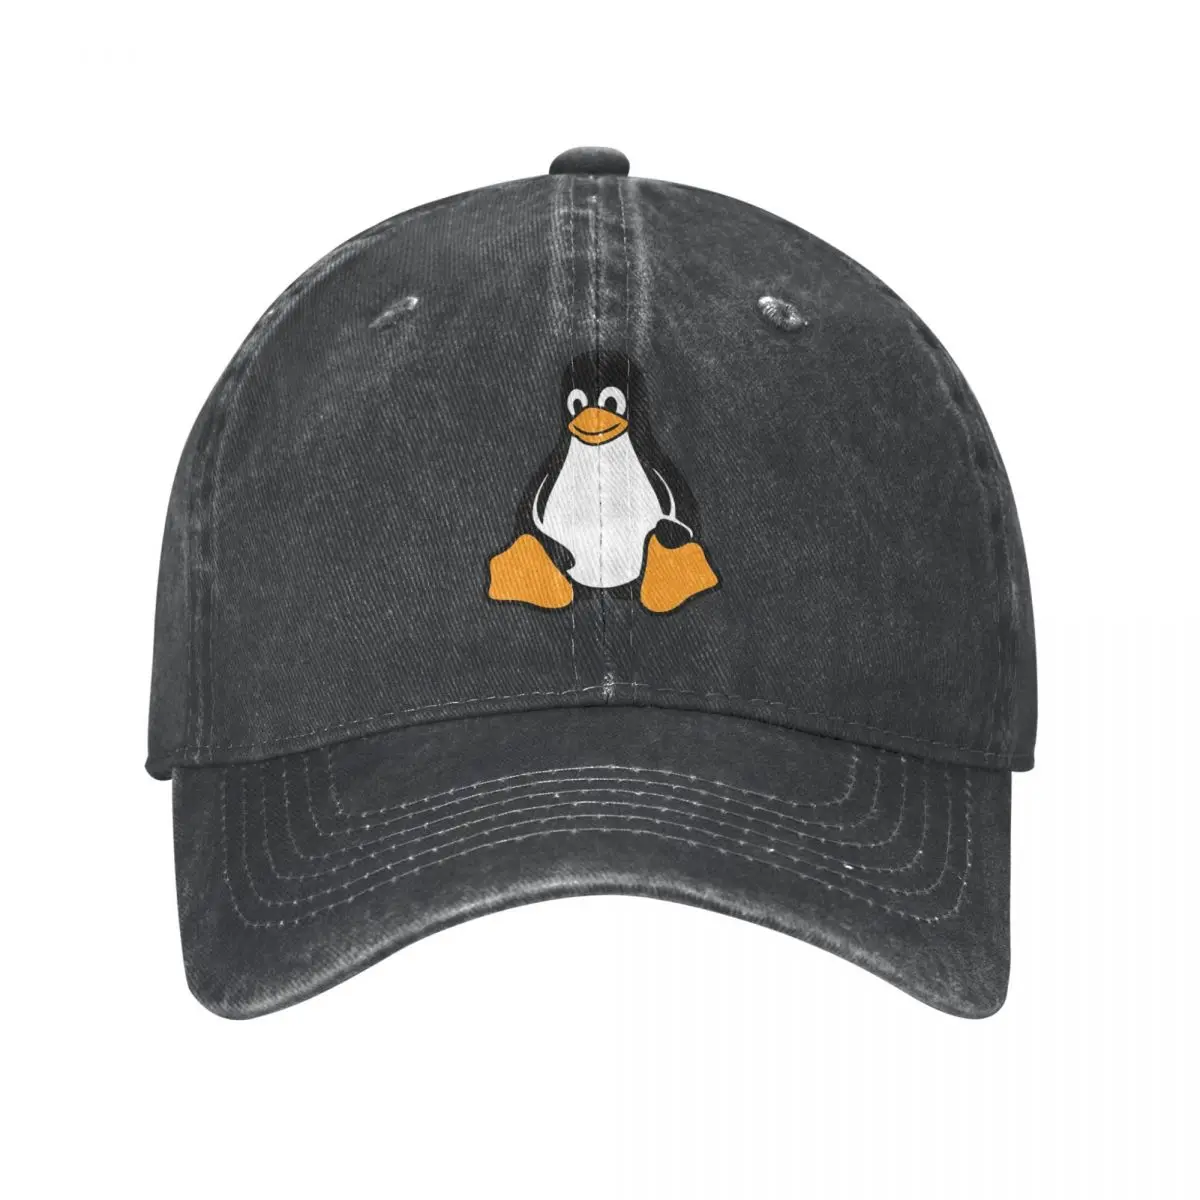 

Linux Tux Pingouin Baseball Cap cowboy hat Peaked cap Cowboy Bebop Hats Men and women hats